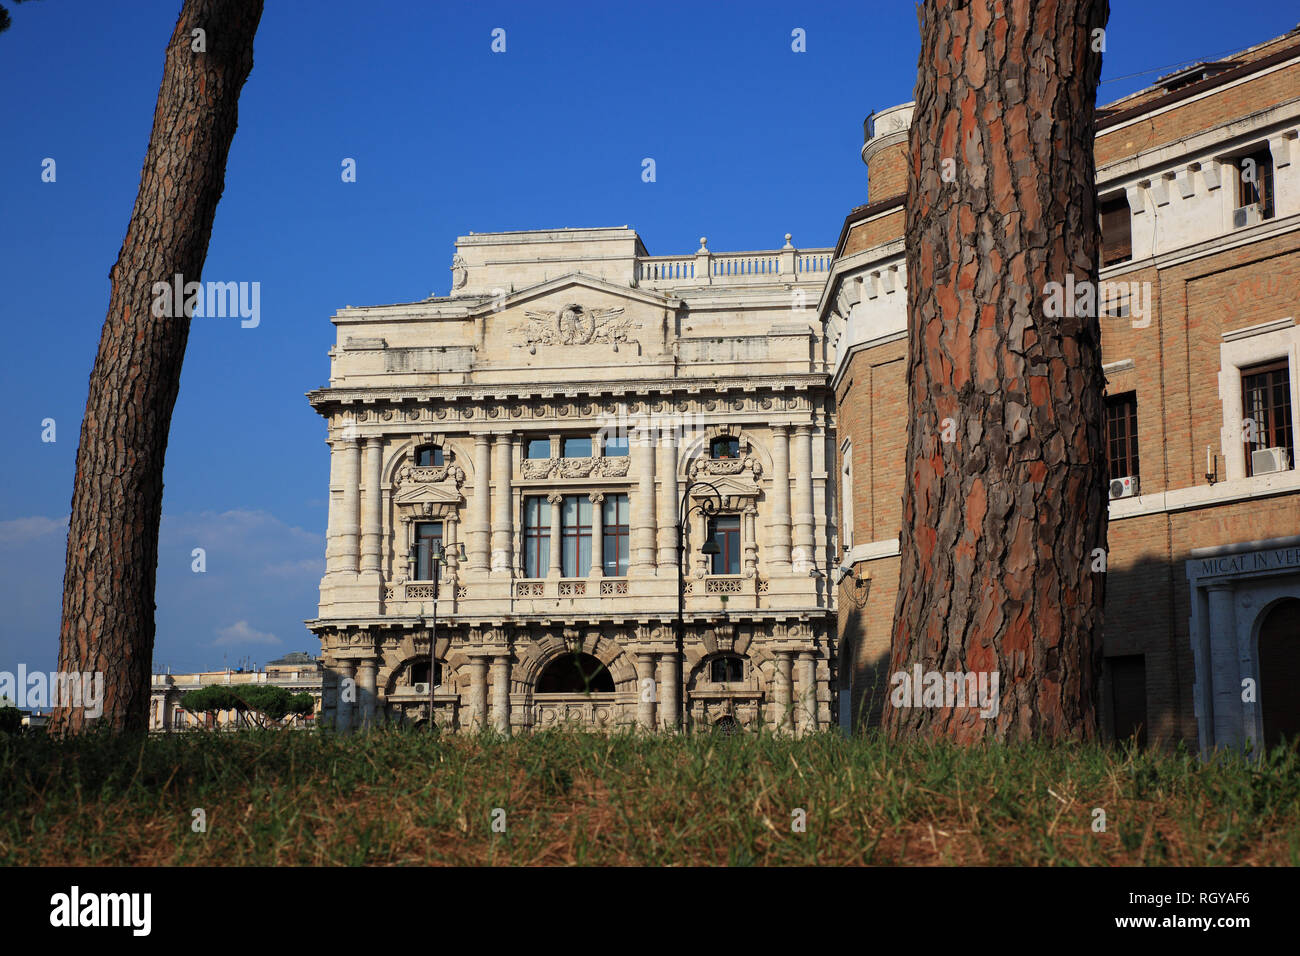 Palazzo di Giustizia, Palace of Justice, district of Prati at river Tiber, Rome, Italy Stock Photo